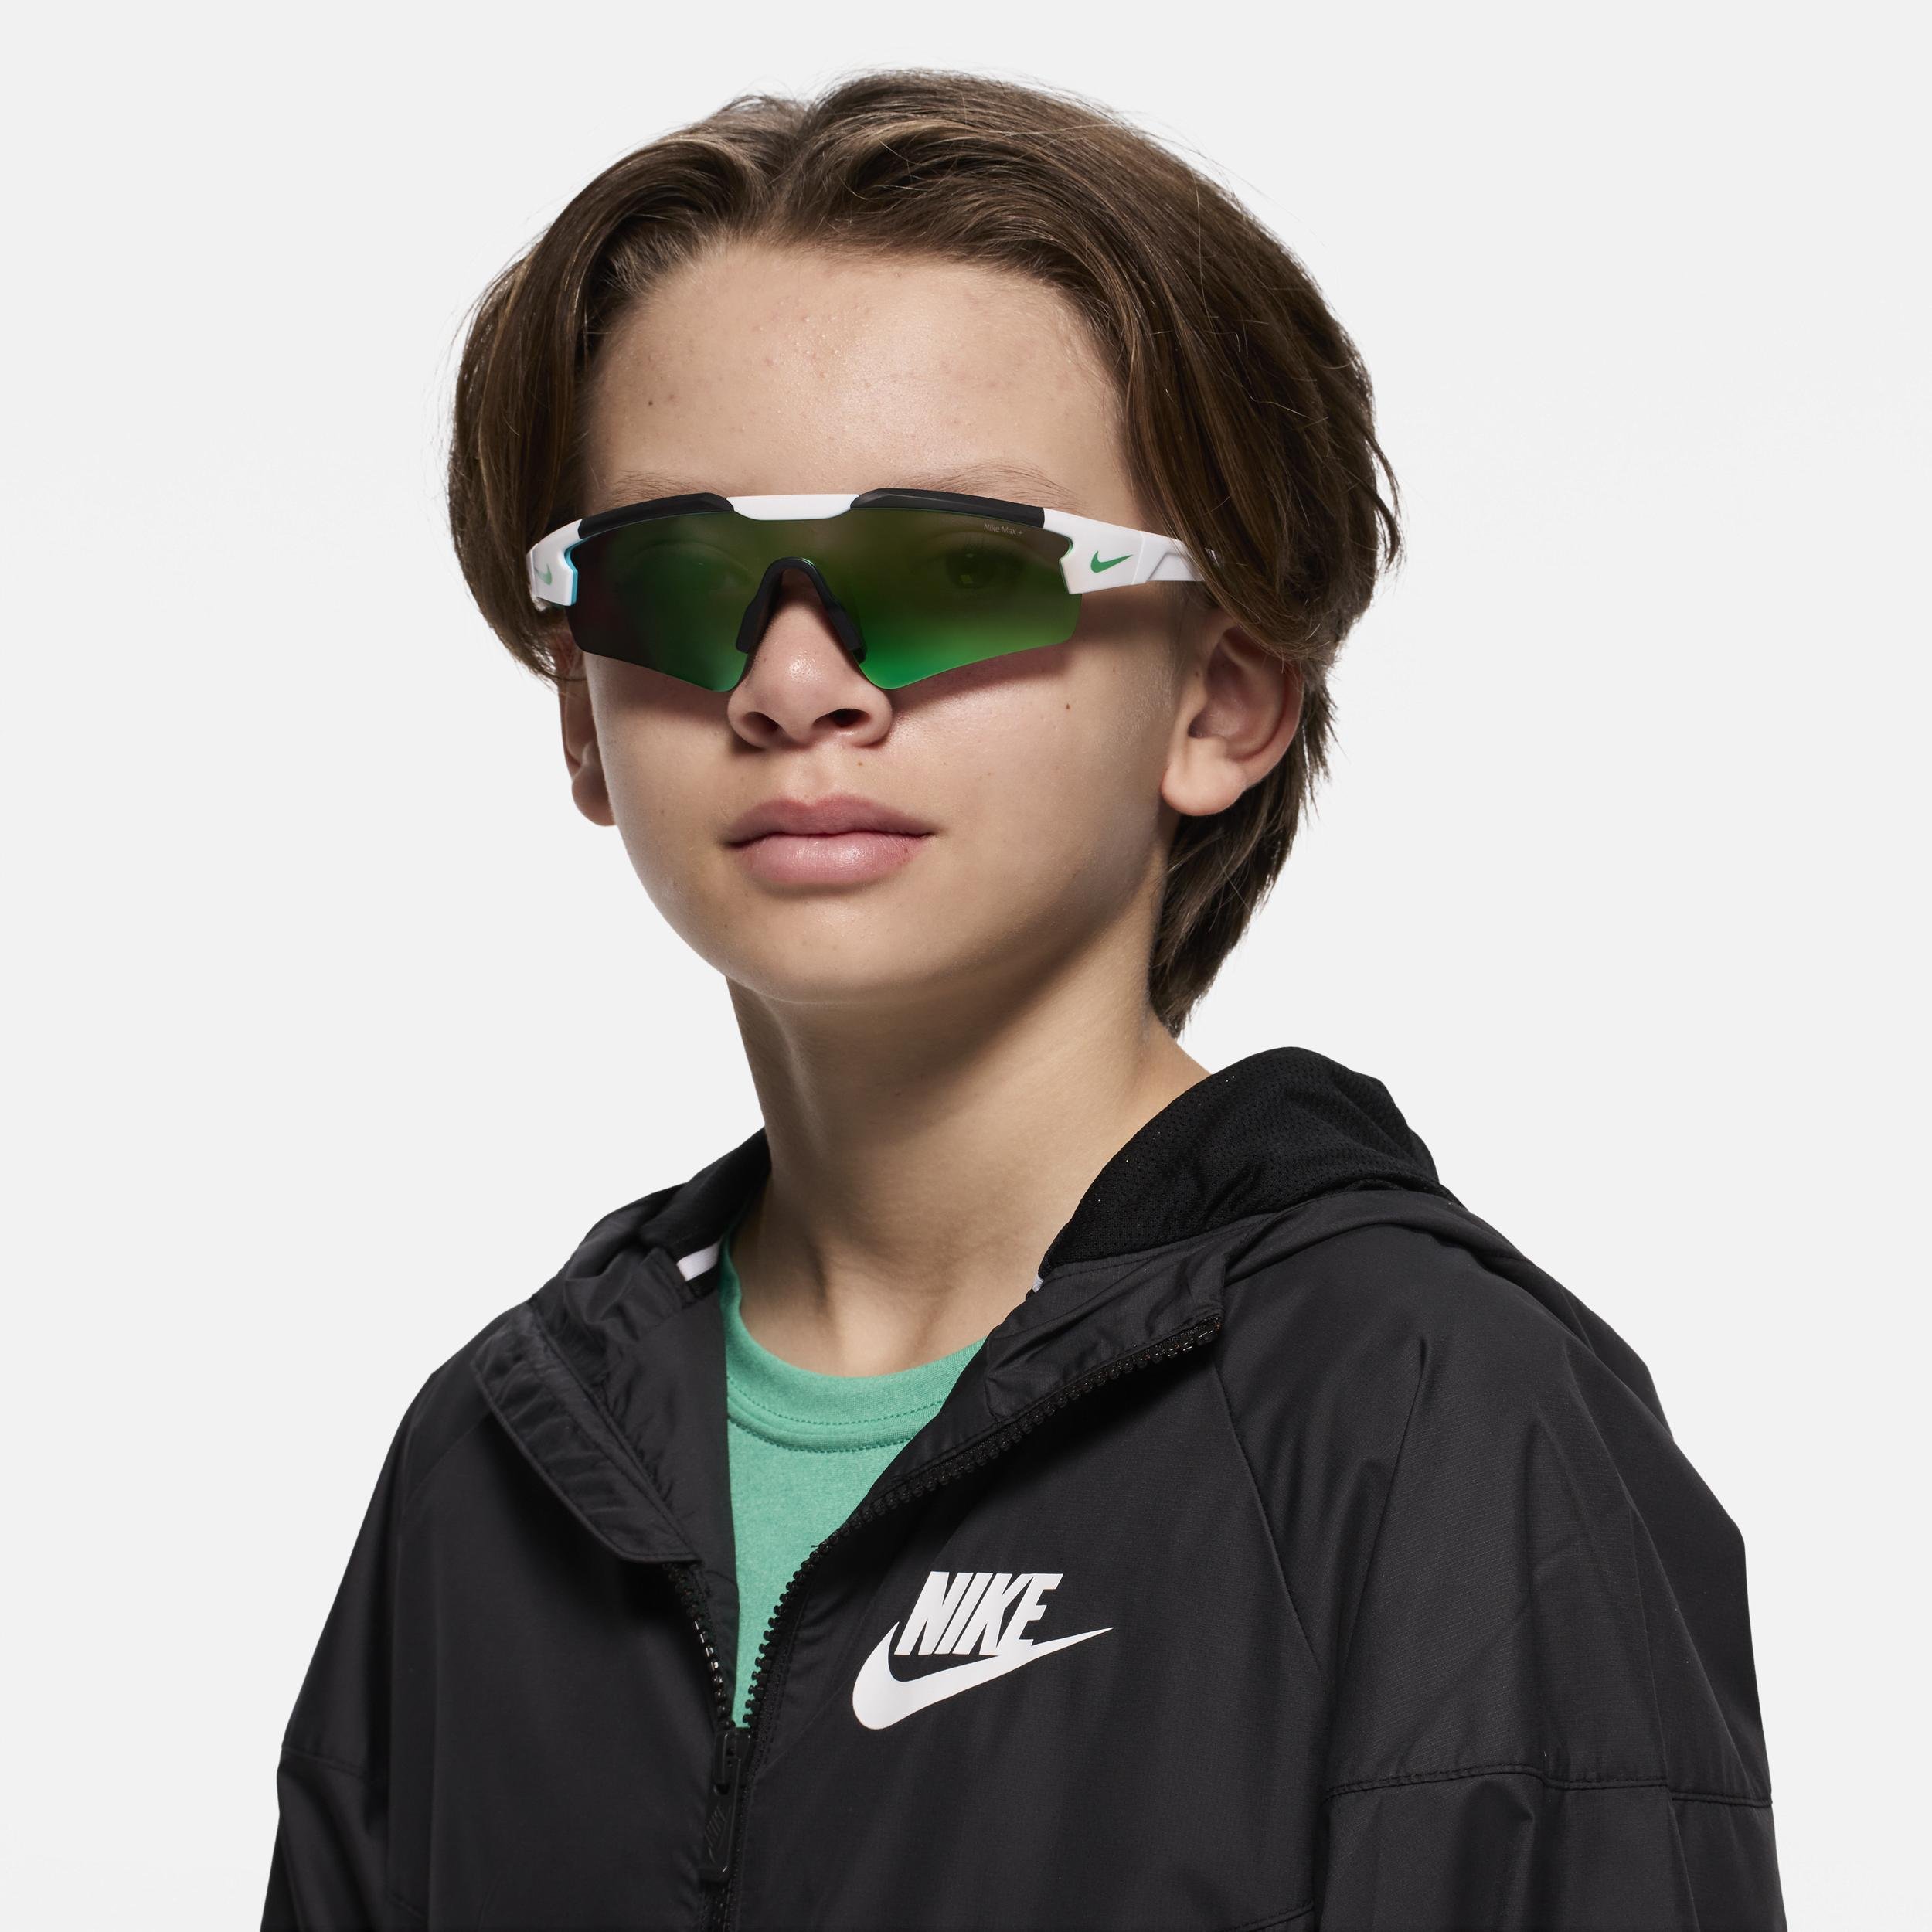 Nike Unisex Cloak Youth Mirrored Sunglasses by NIKE